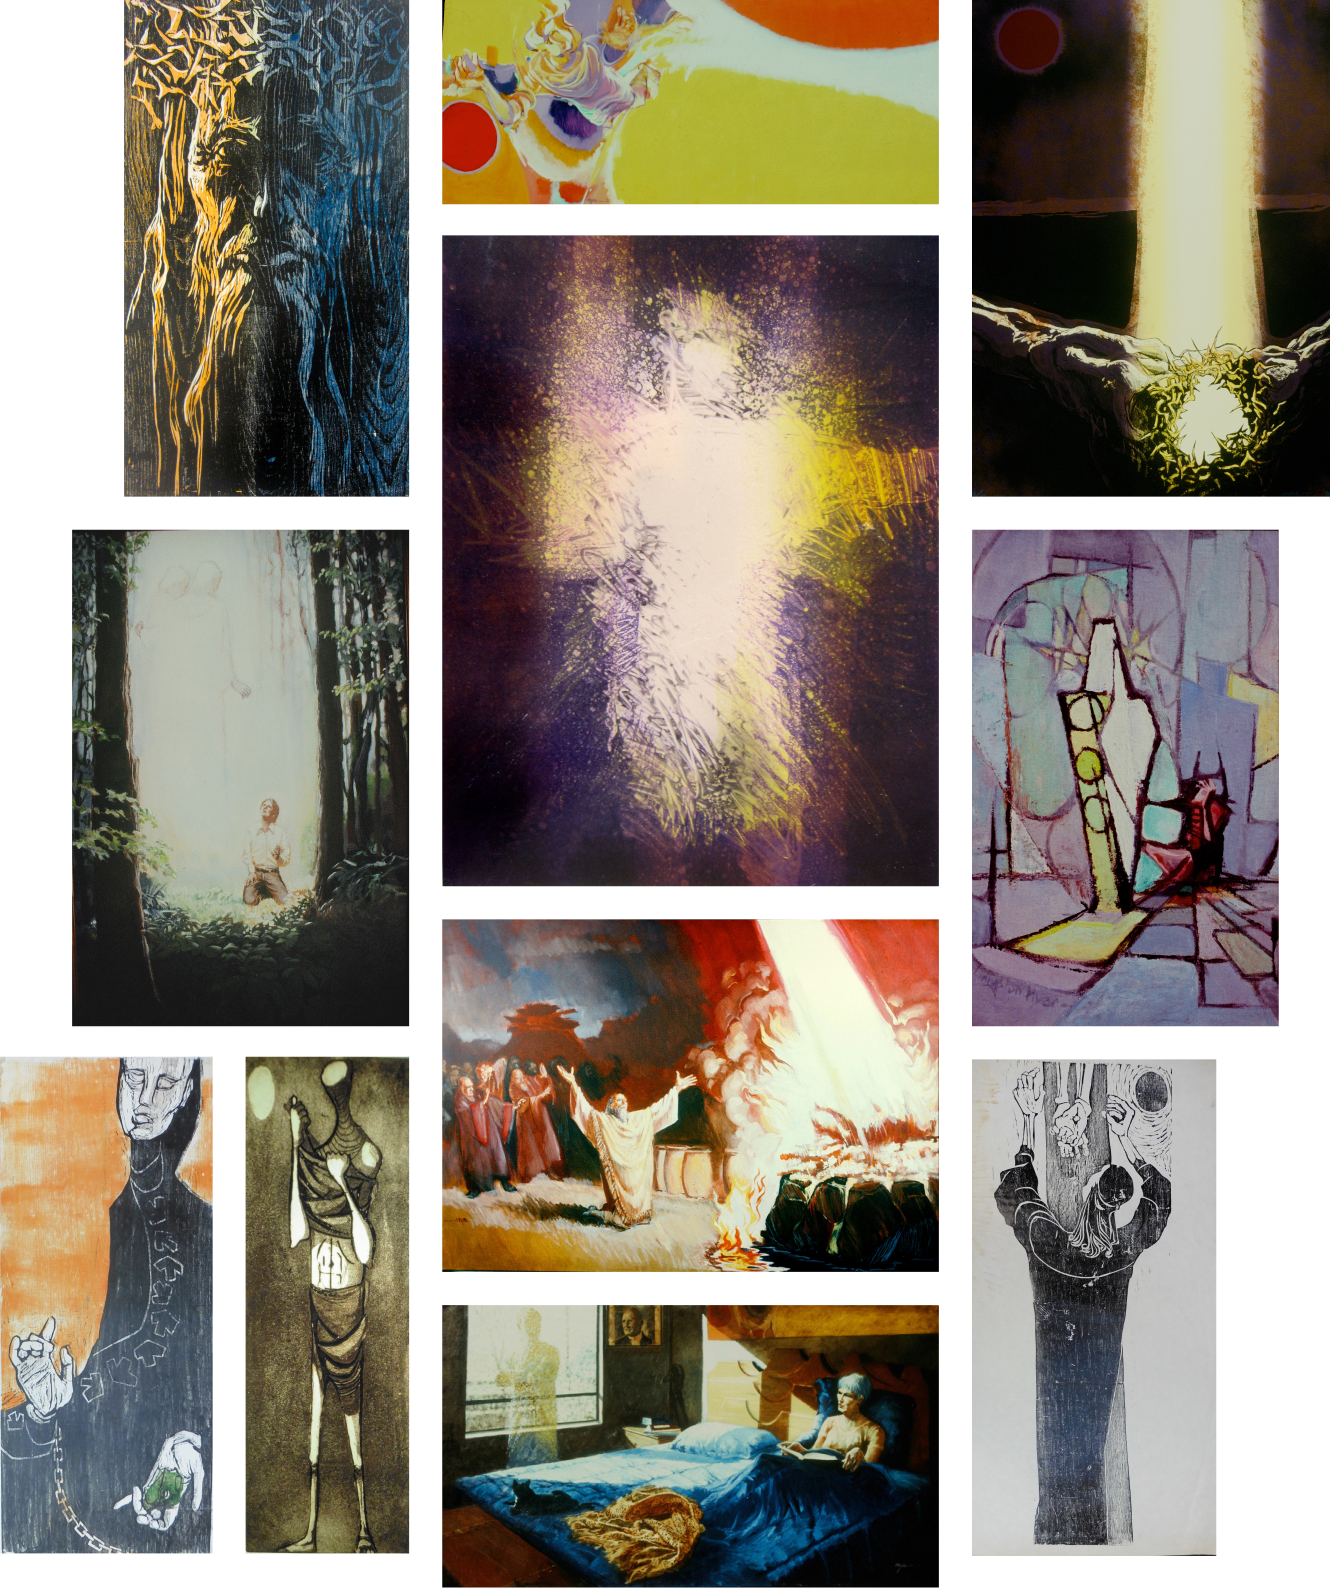 small images of spiritual artwork